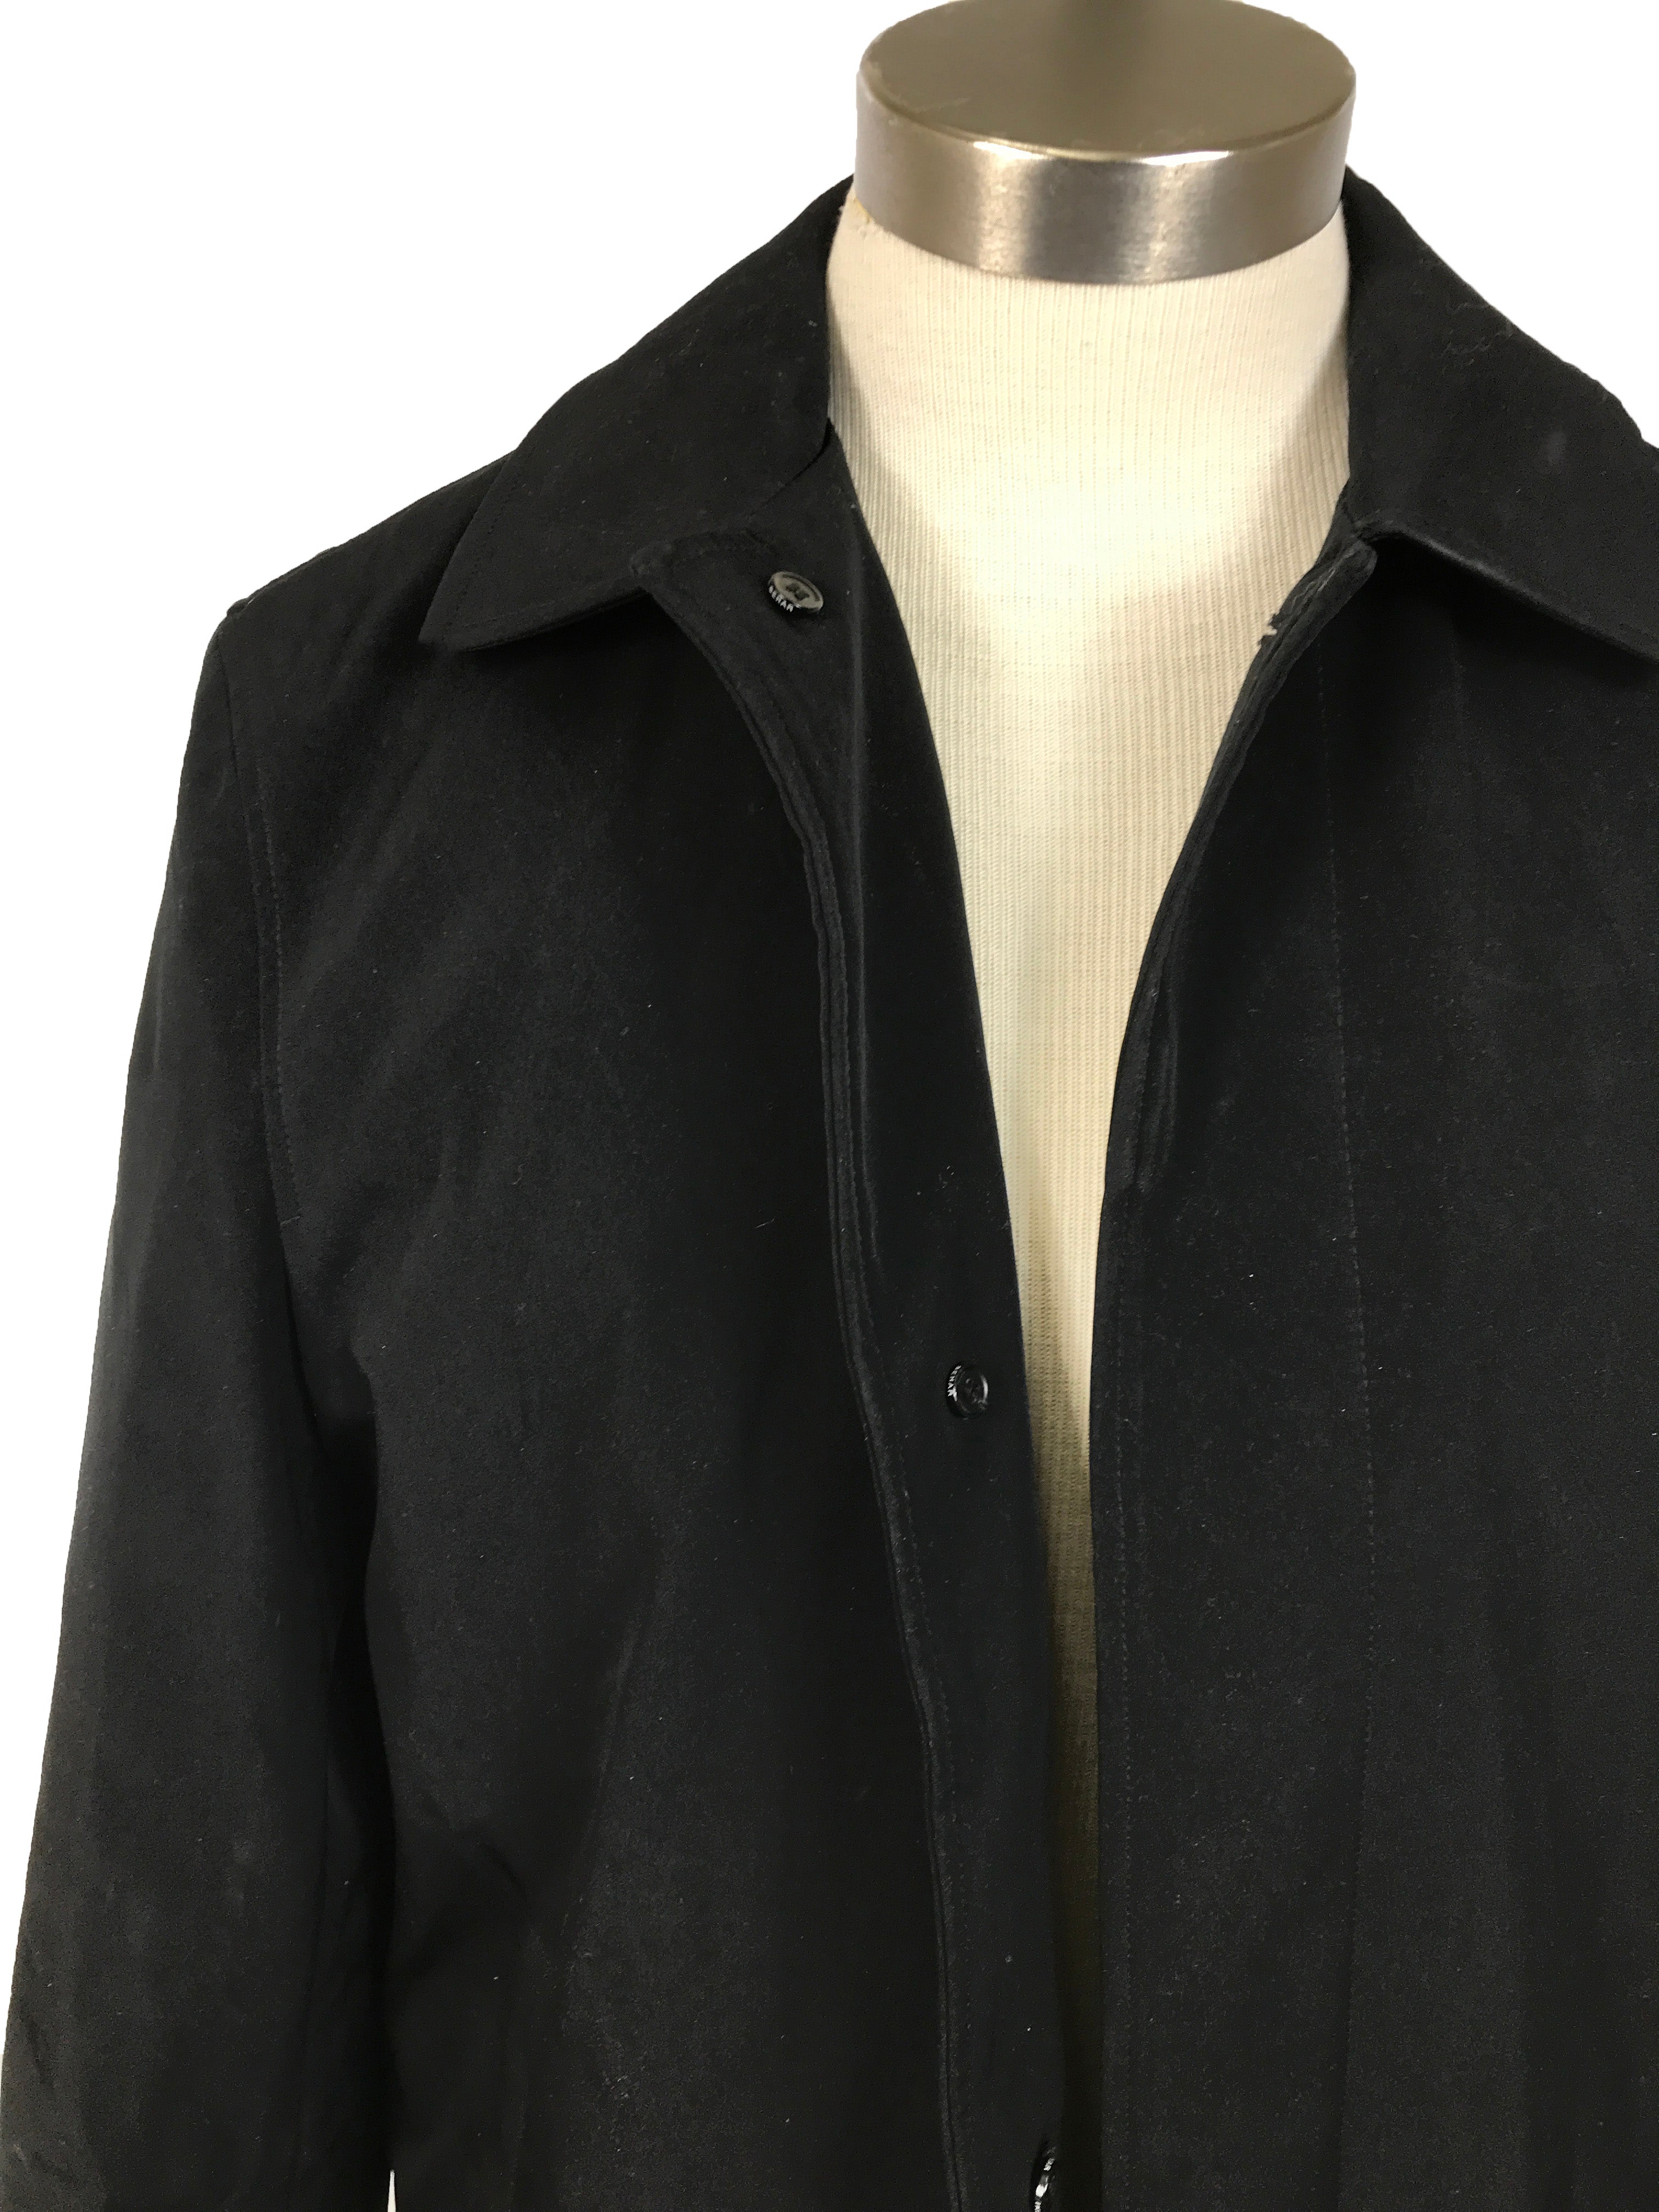 Ike Behar Black Coat Men's Size Small 36-38